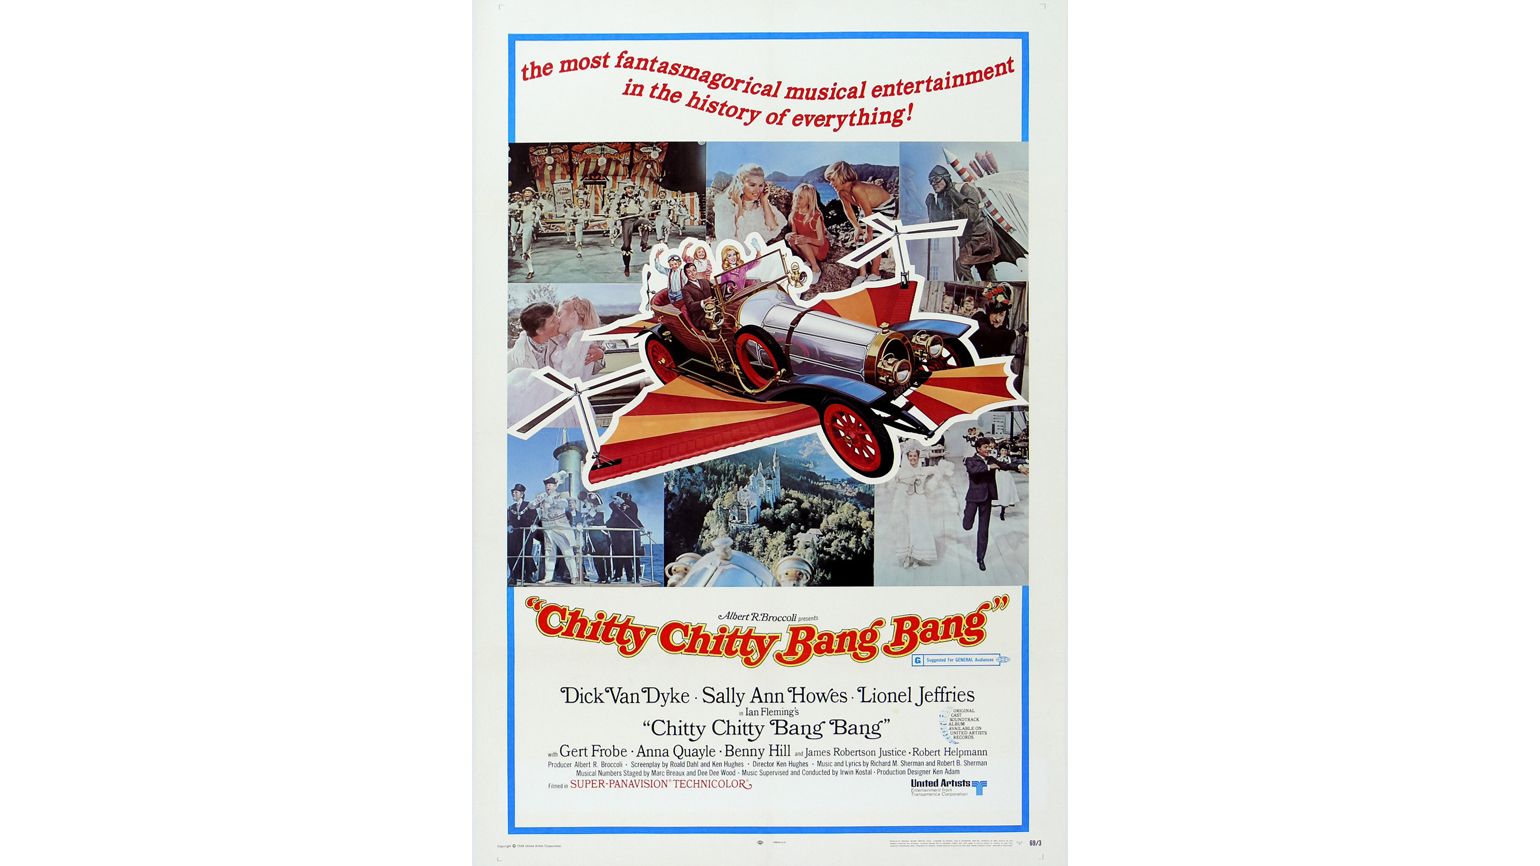 Dick Van Dyke and Sally Ann Howes Chitty Chitty Bang Bang, 1967 Poster.